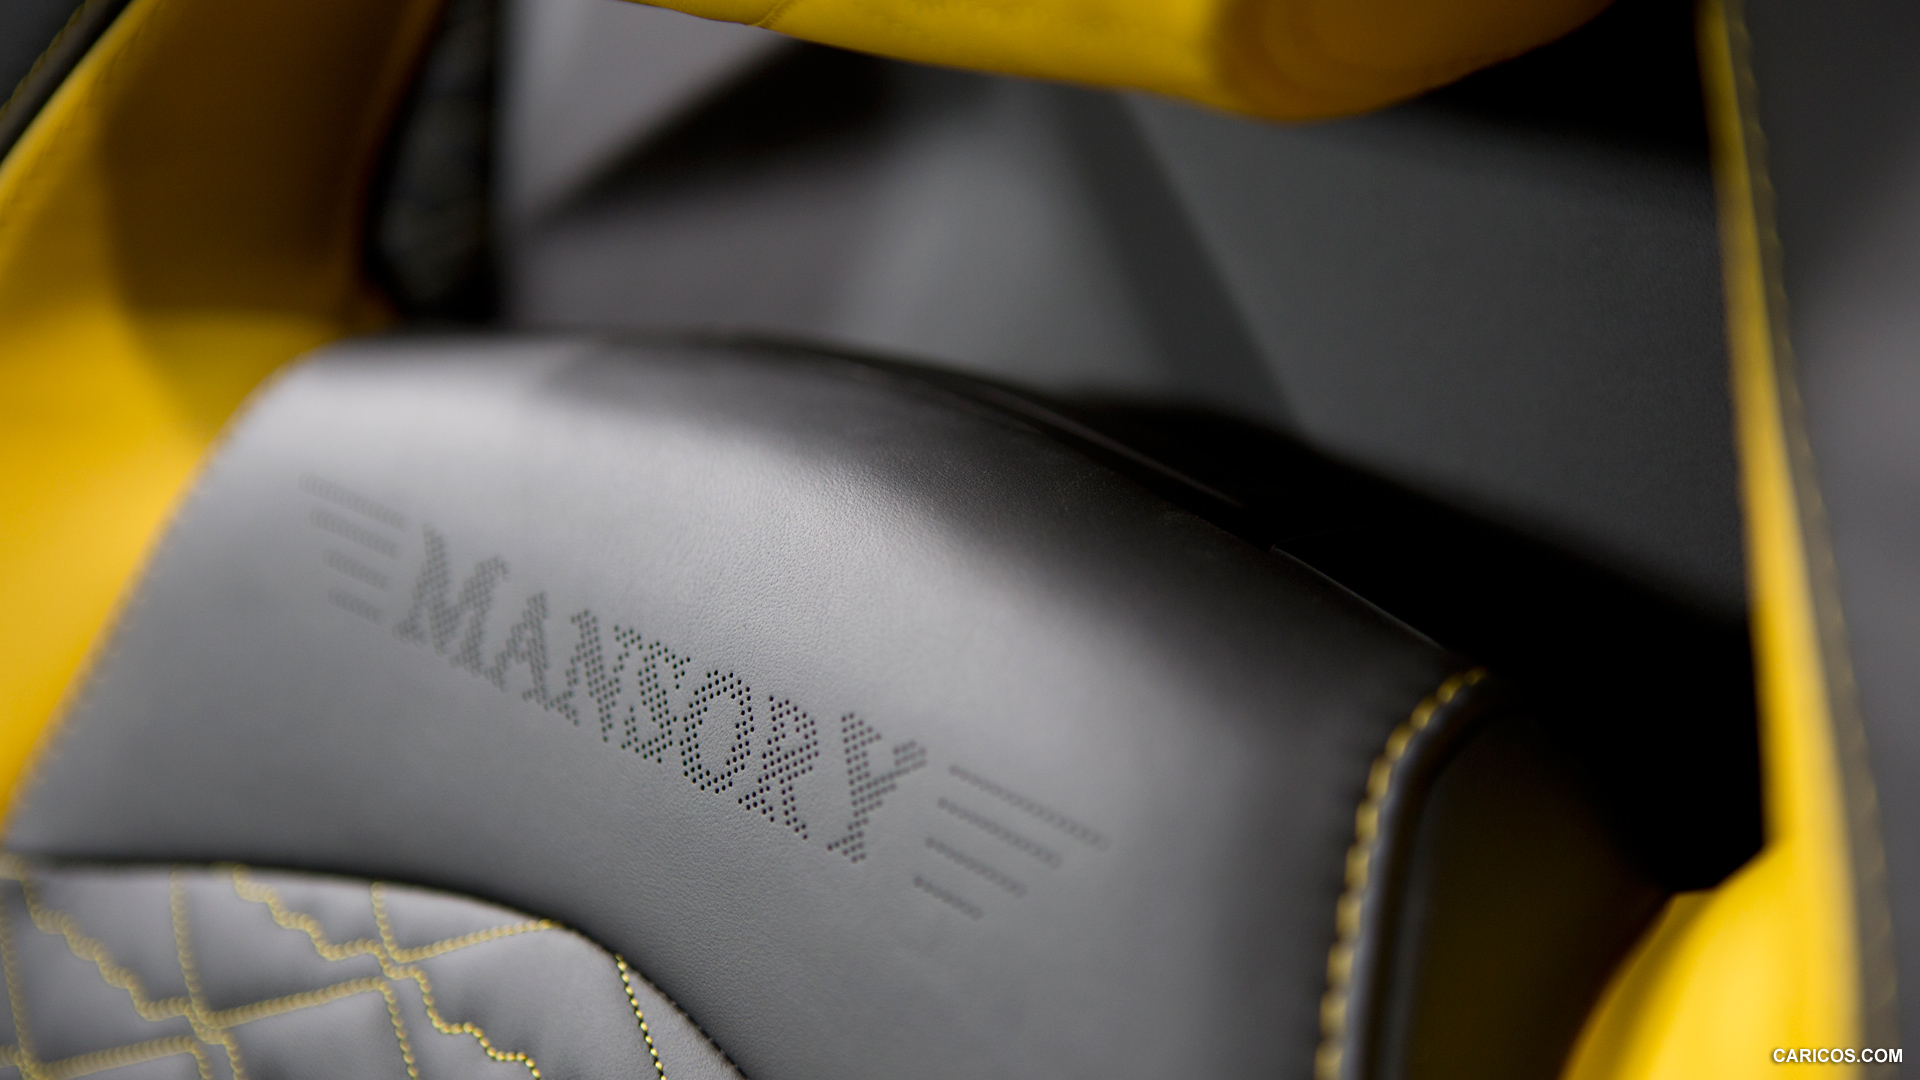 2014 Mansory Carbonado Apertos based on Lamborghini Aventador Roadster  - Interior Detail, #7 of 8